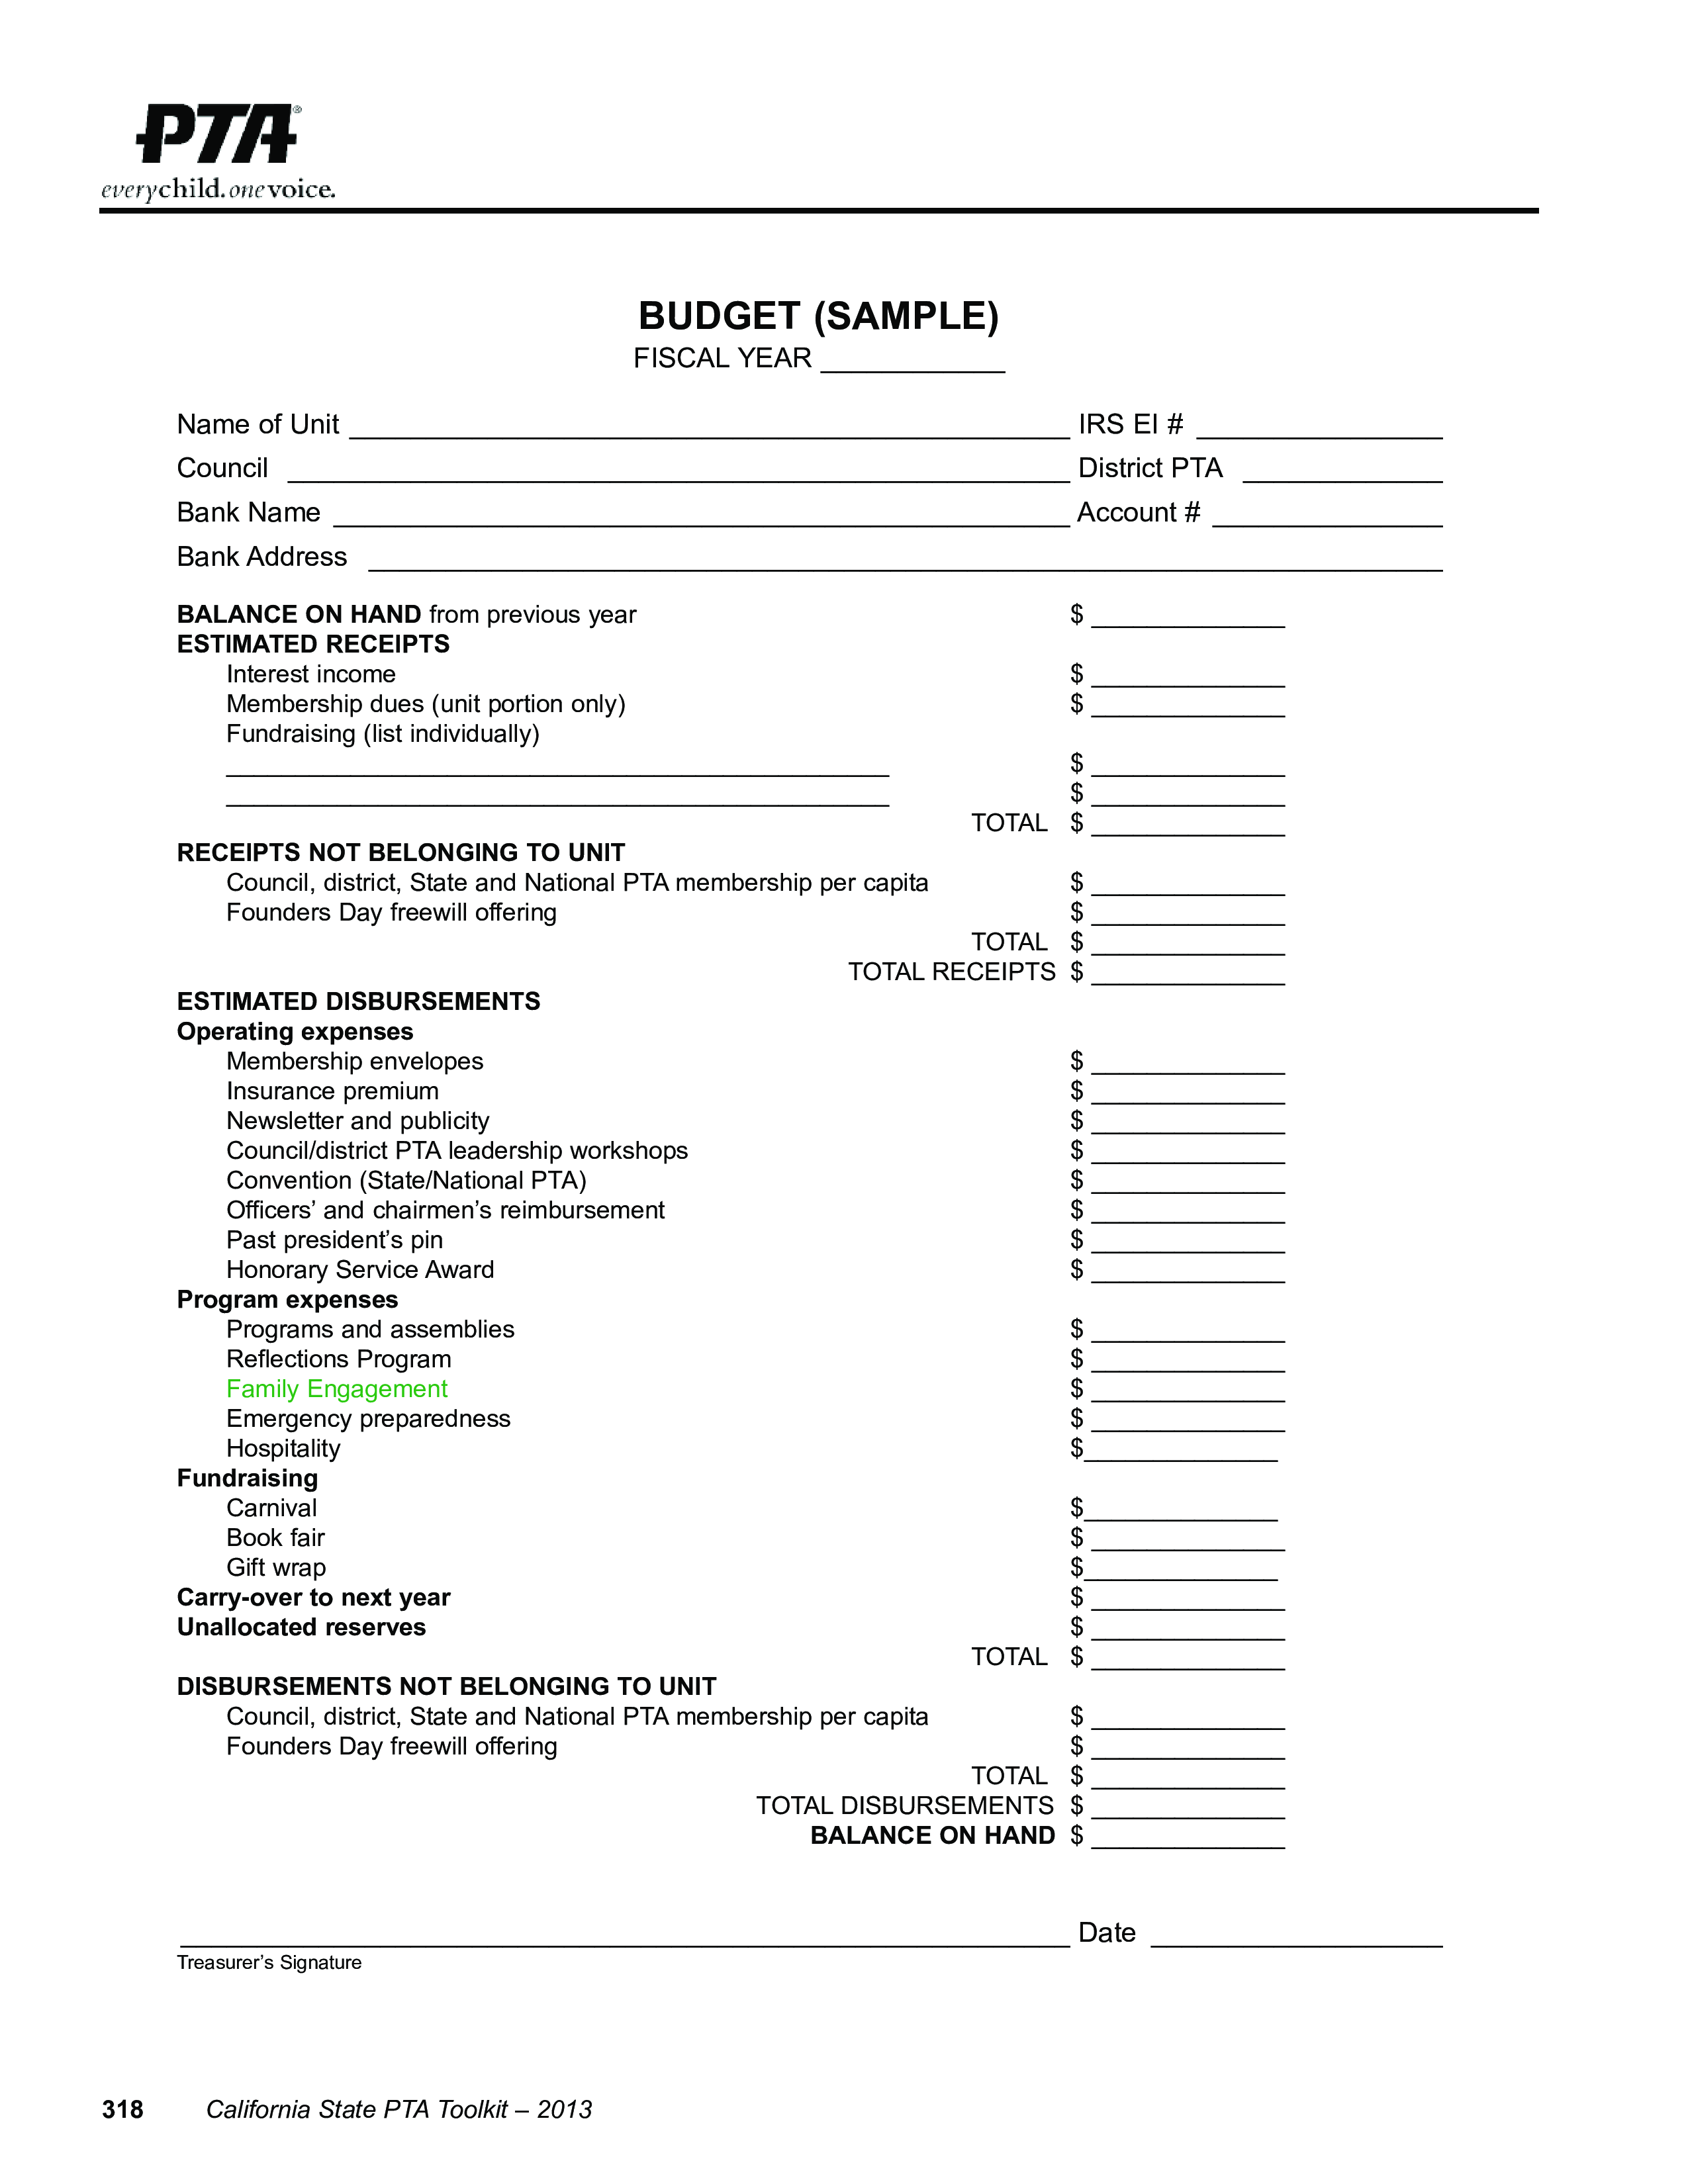 Budget Sample Form main image